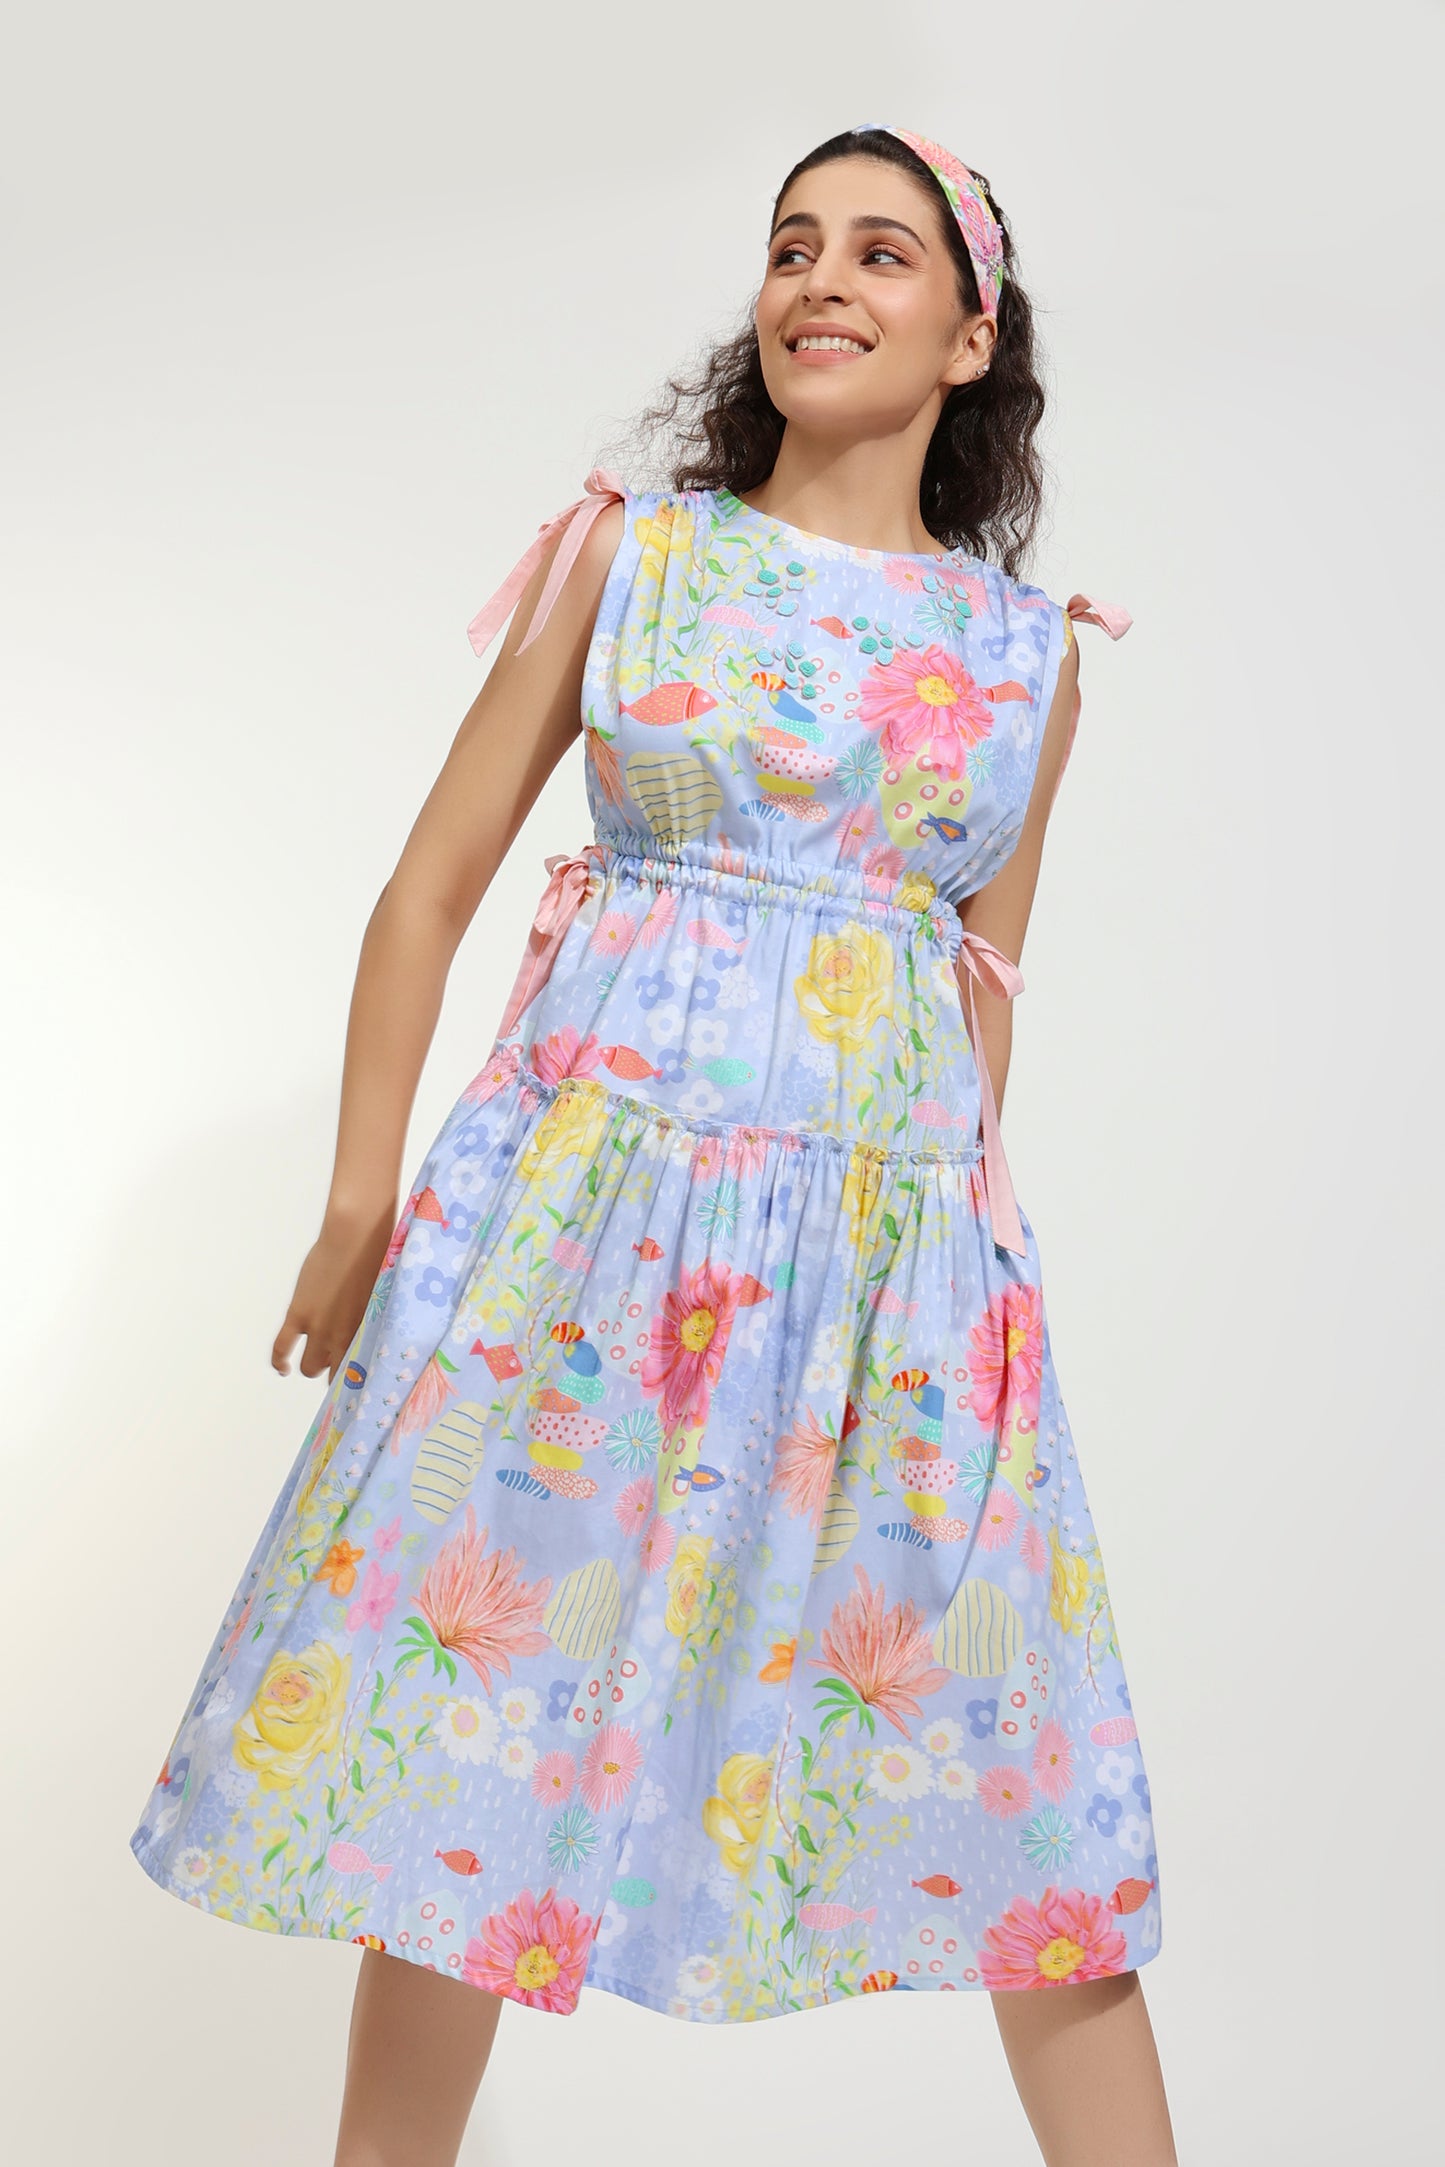 Dandy Bloom Embellished Printed Cut Out Dress (Joey & Pooh)